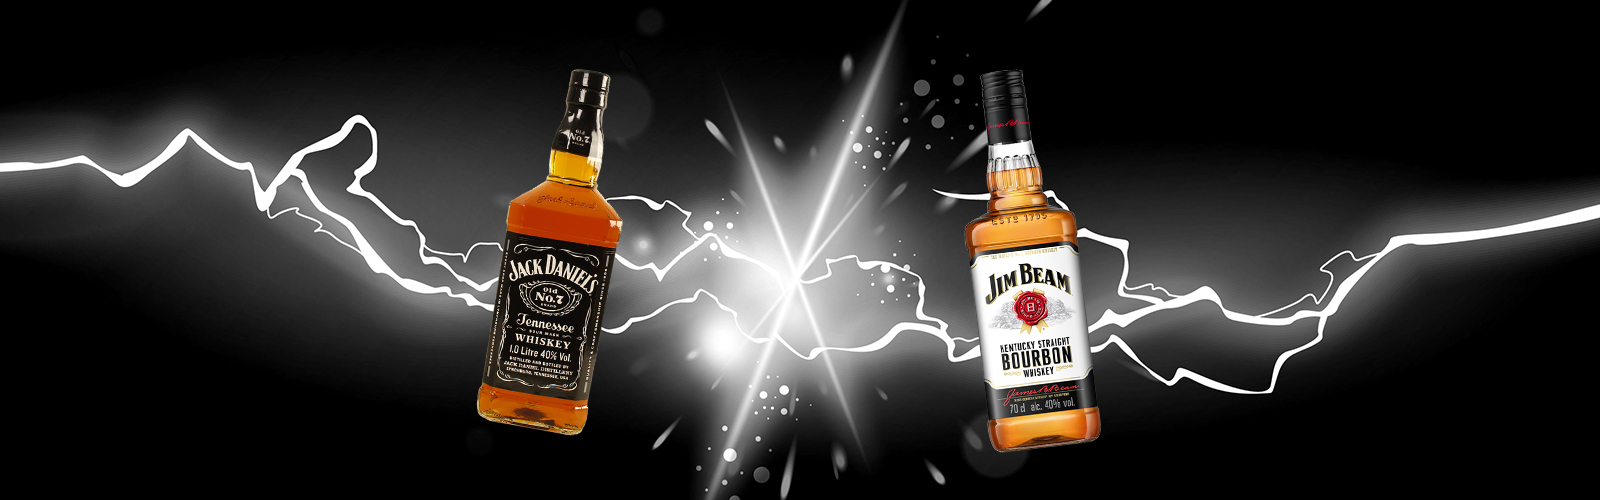 Jack Daniel's vs. Jim Beam